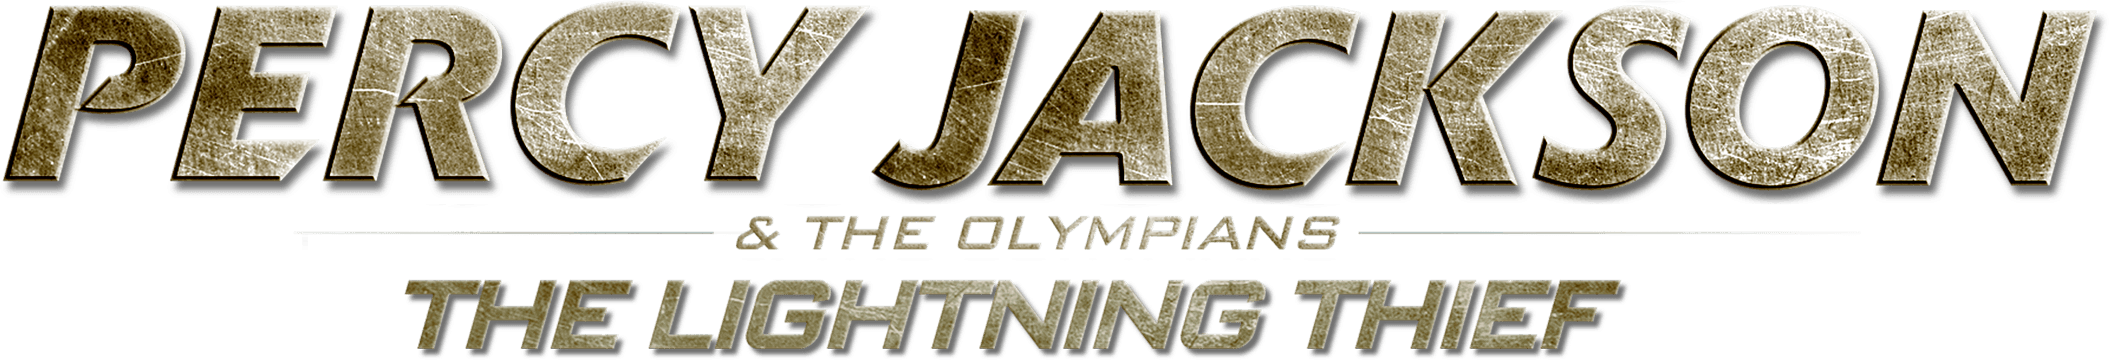 Percy Jackson & the Olympians: The Lightning Thief logo